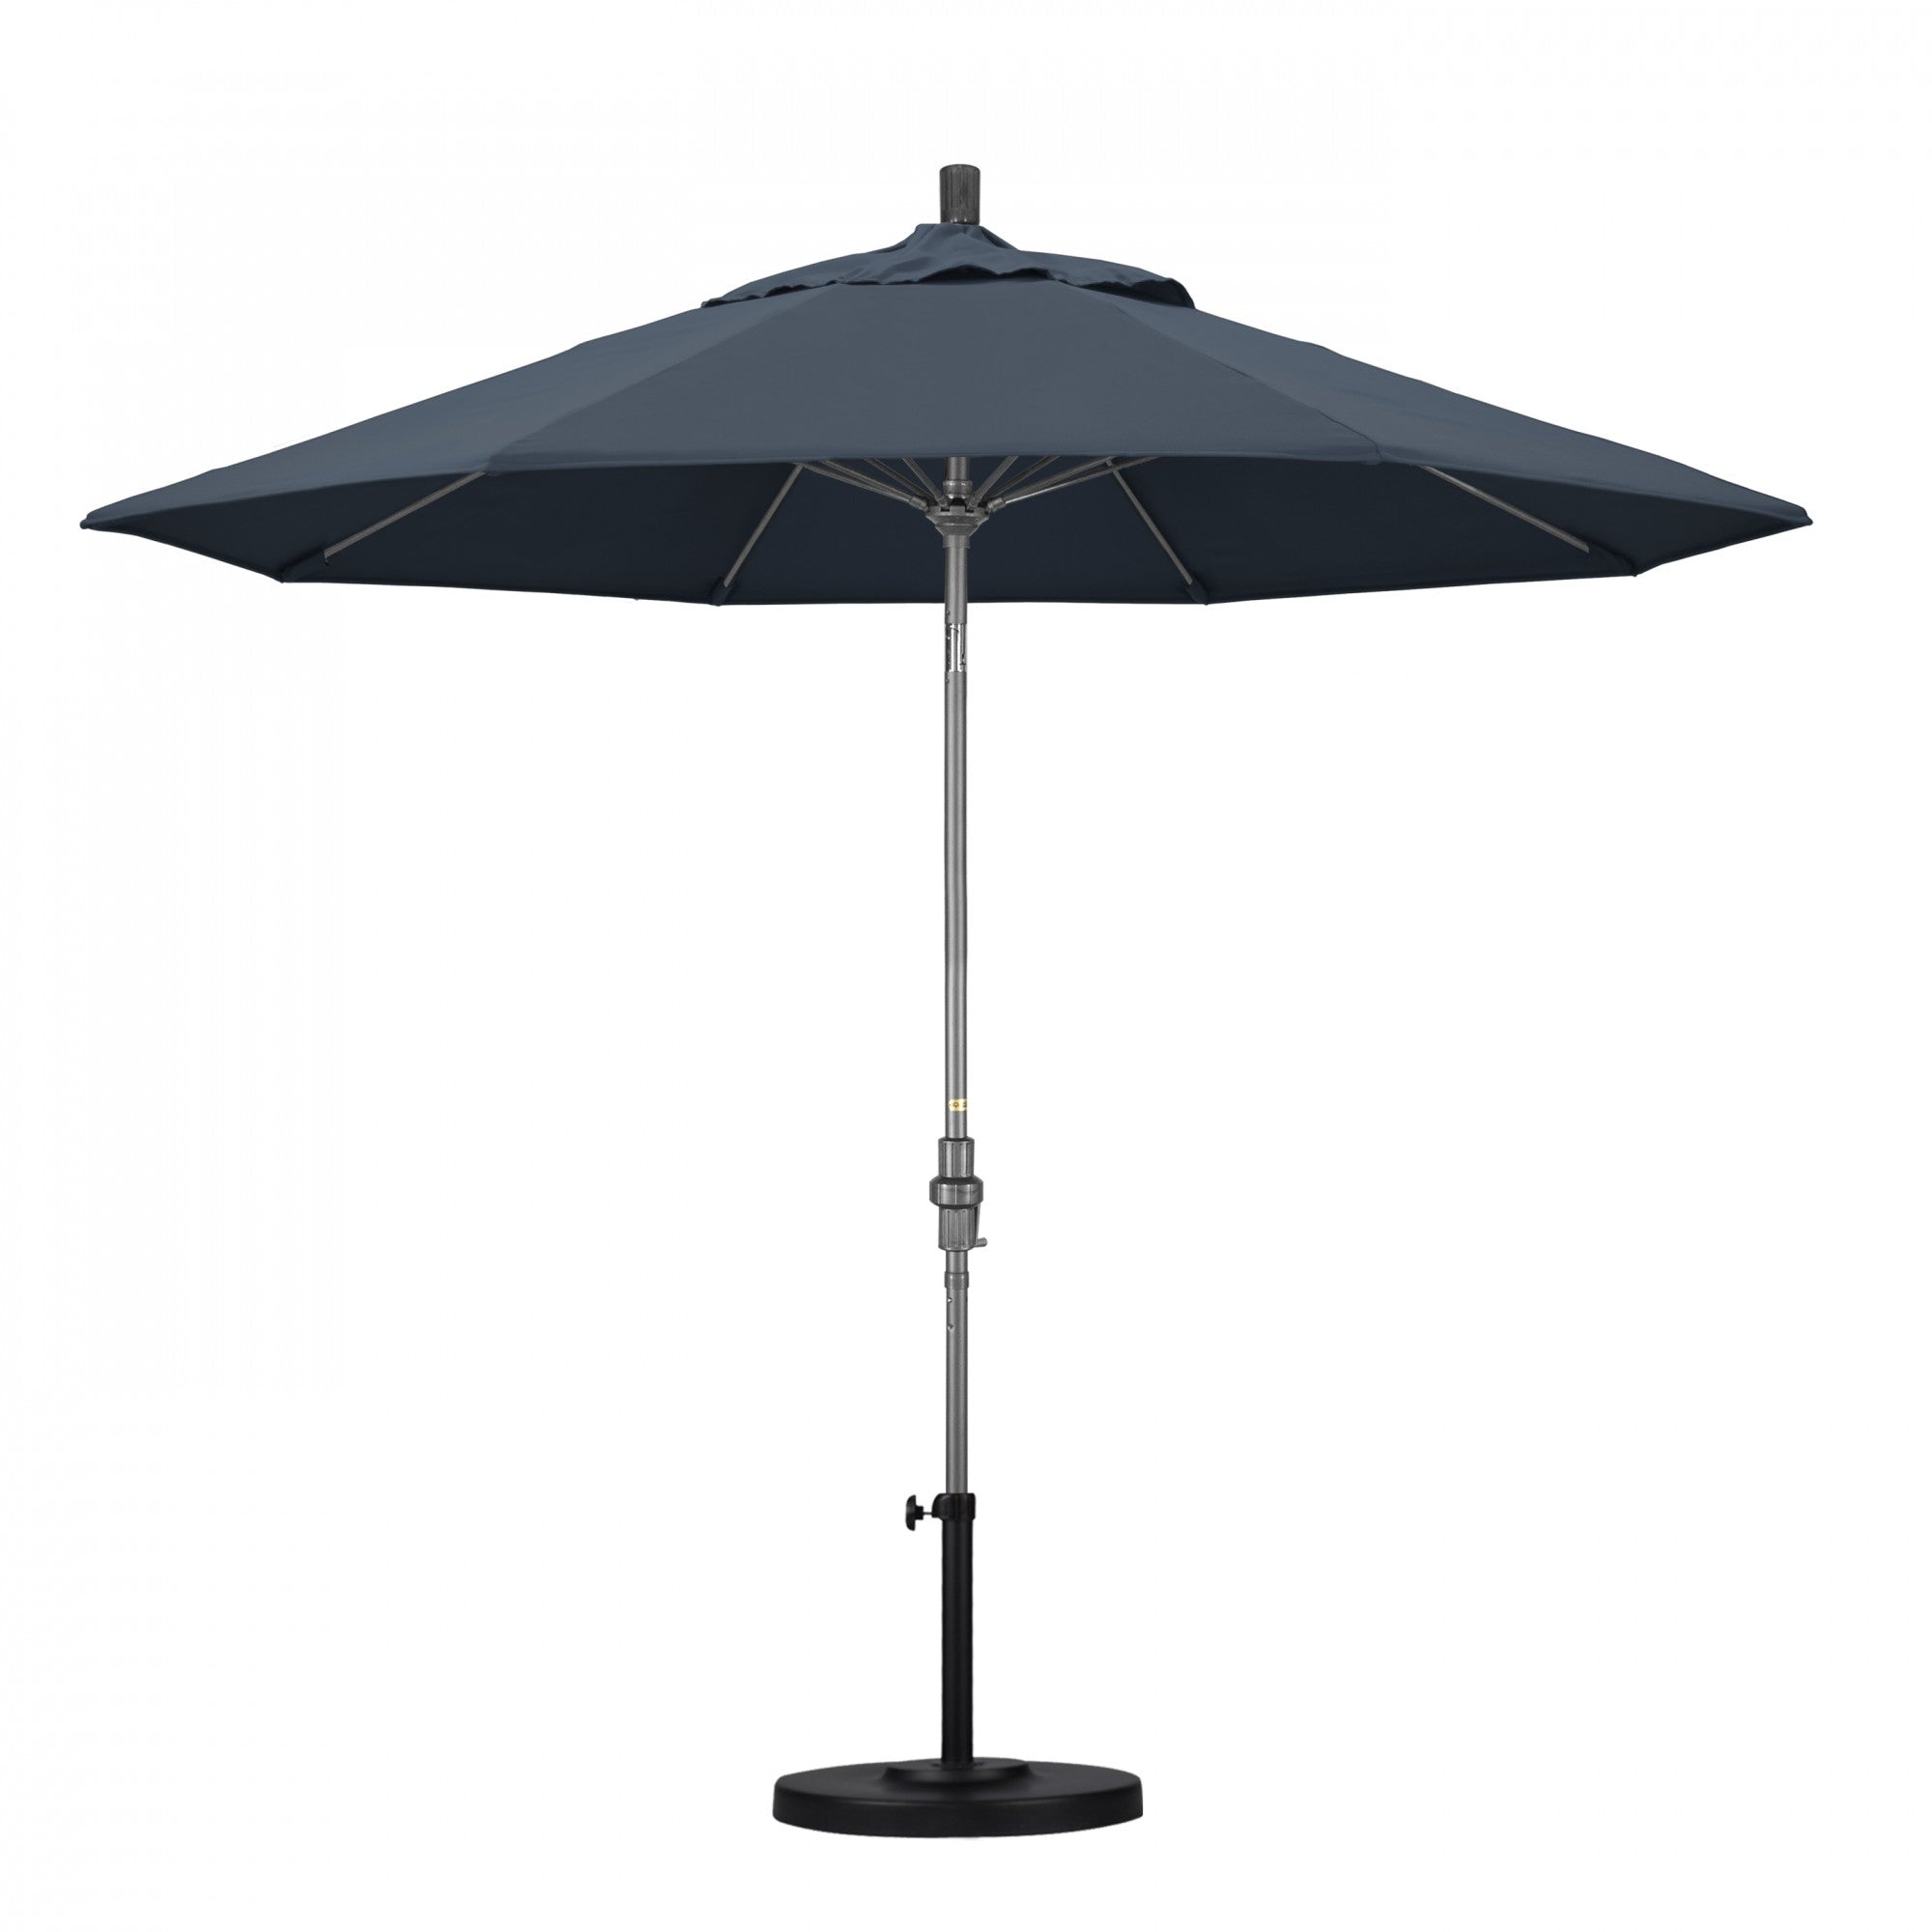 California Umbrella - 9' - Patio Umbrella Umbrella - Aluminum Pole - Sapphire - Pacifica - GSCUF908010-SA52